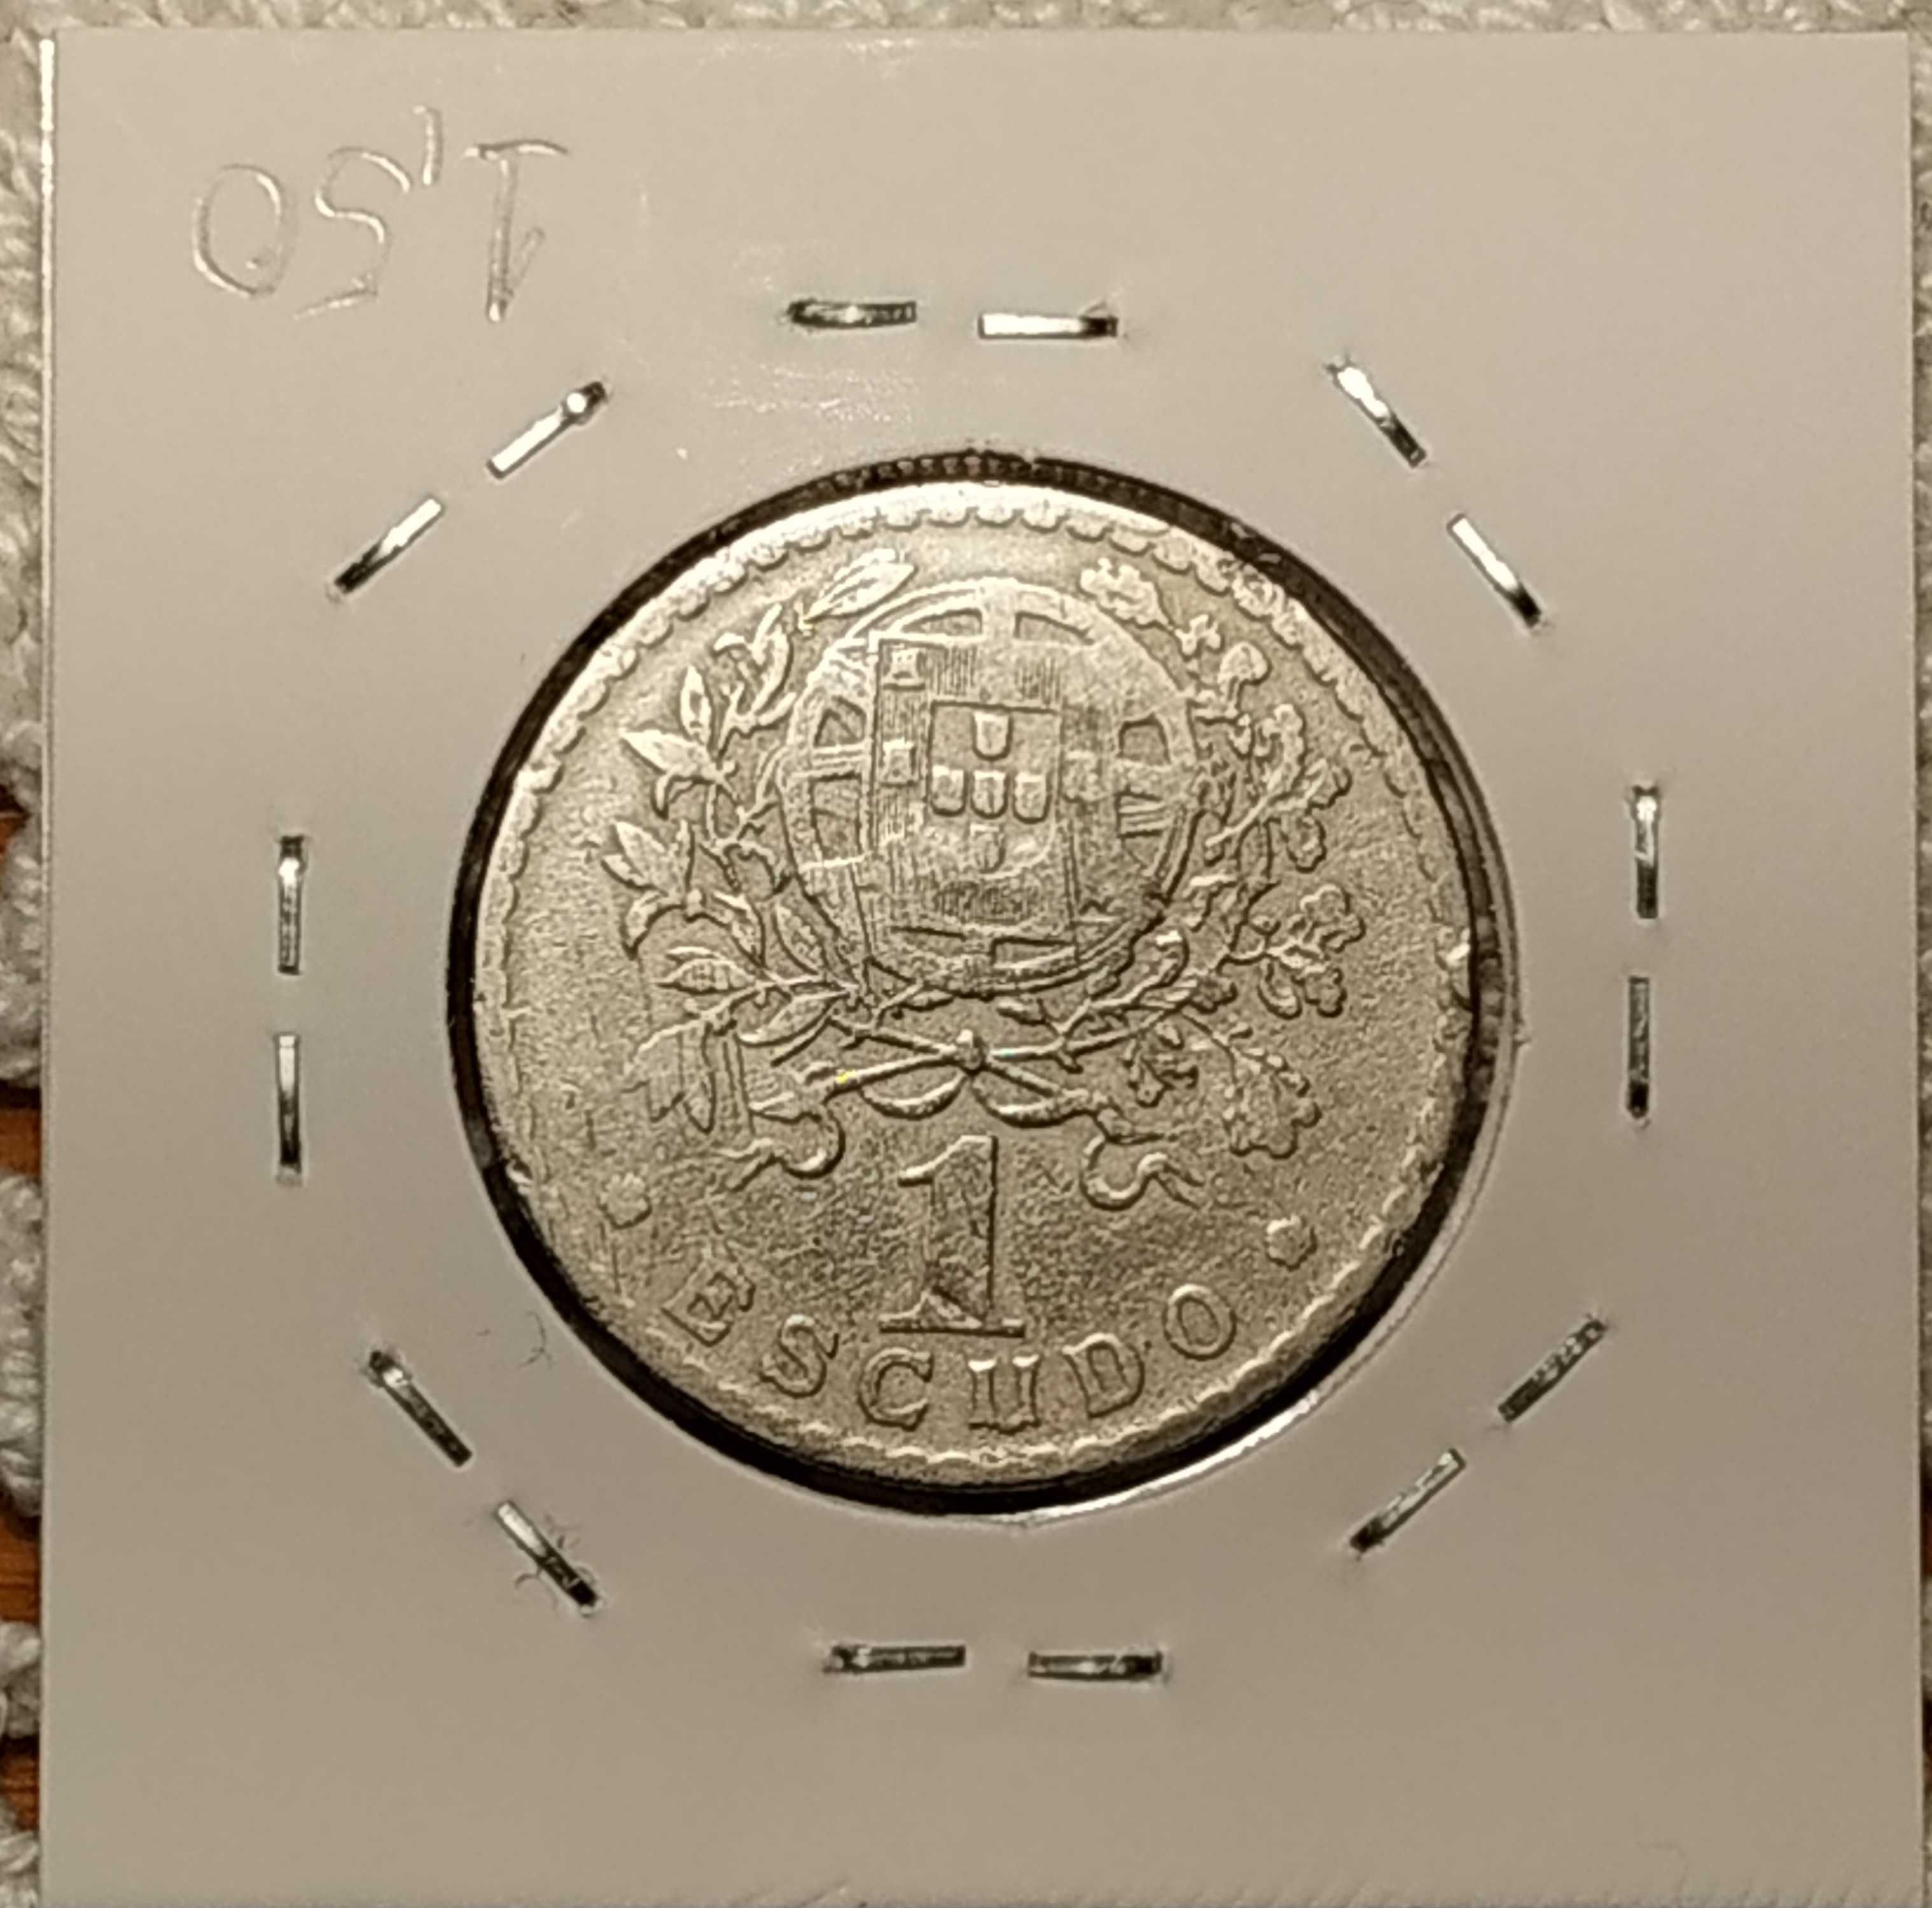 Portugal - moeda de 1 escudo de 1940